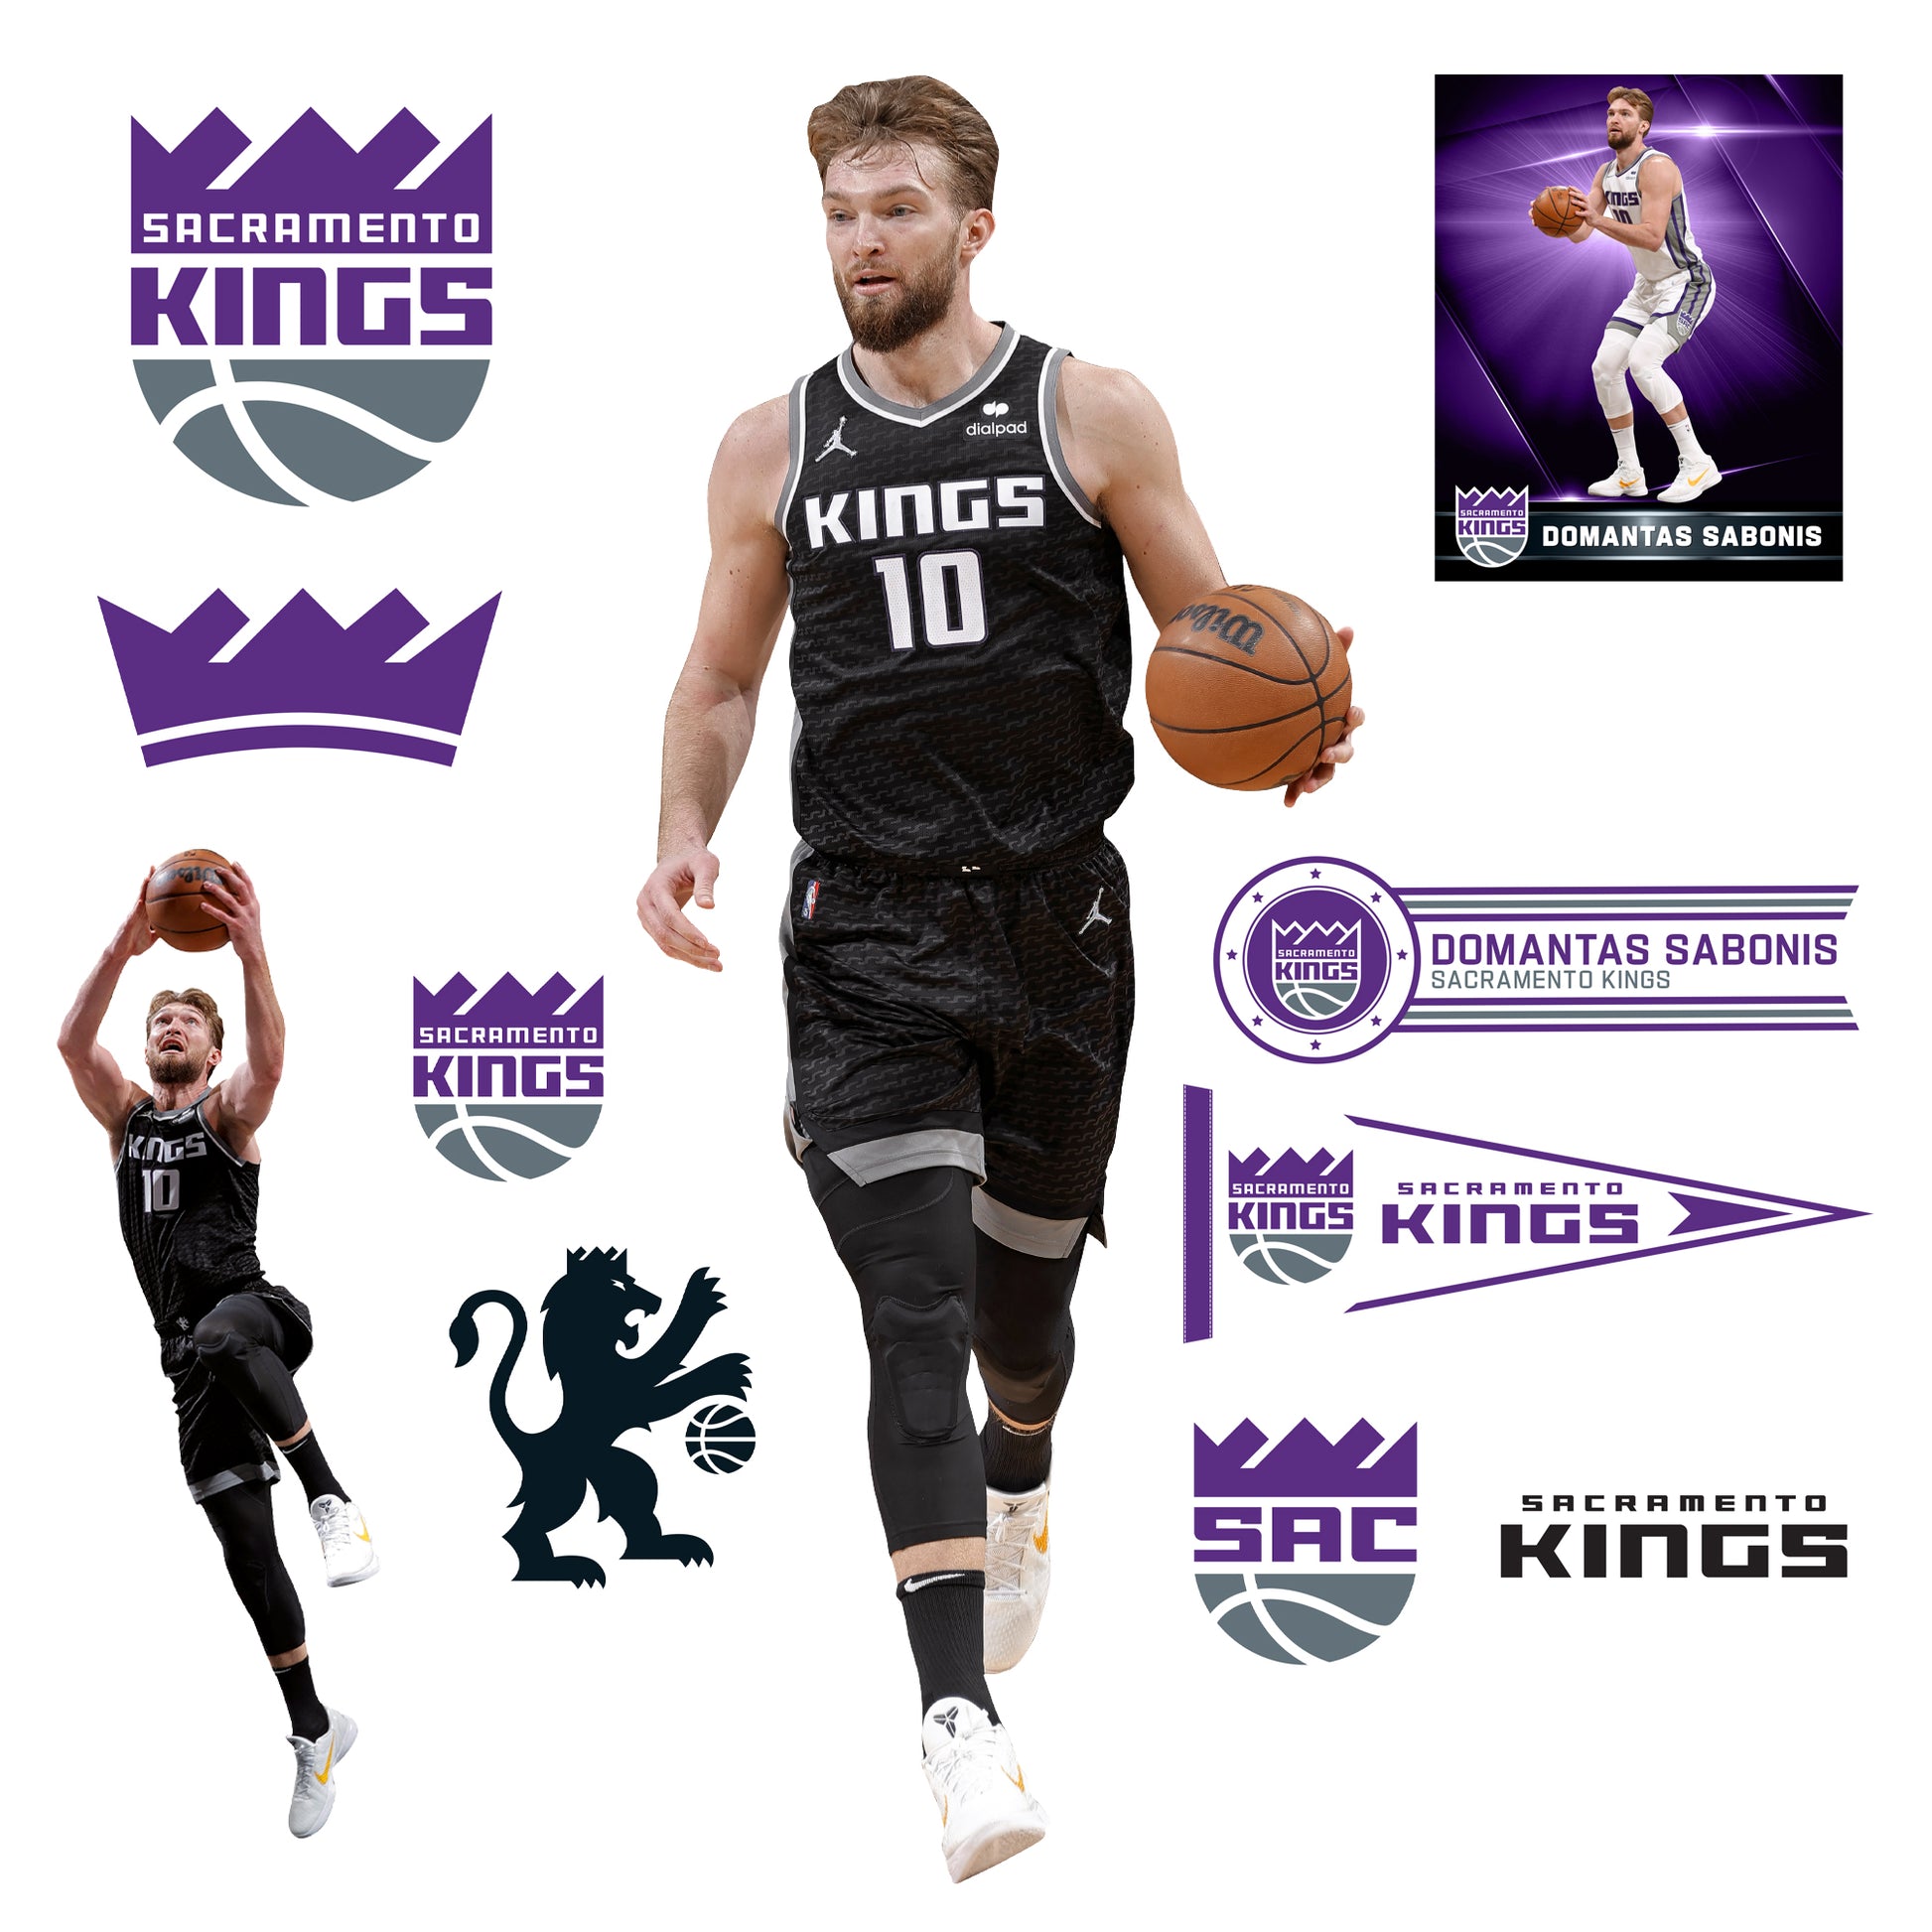  Sacramento Kings NBA Officially Licensed Sticker Vinyl